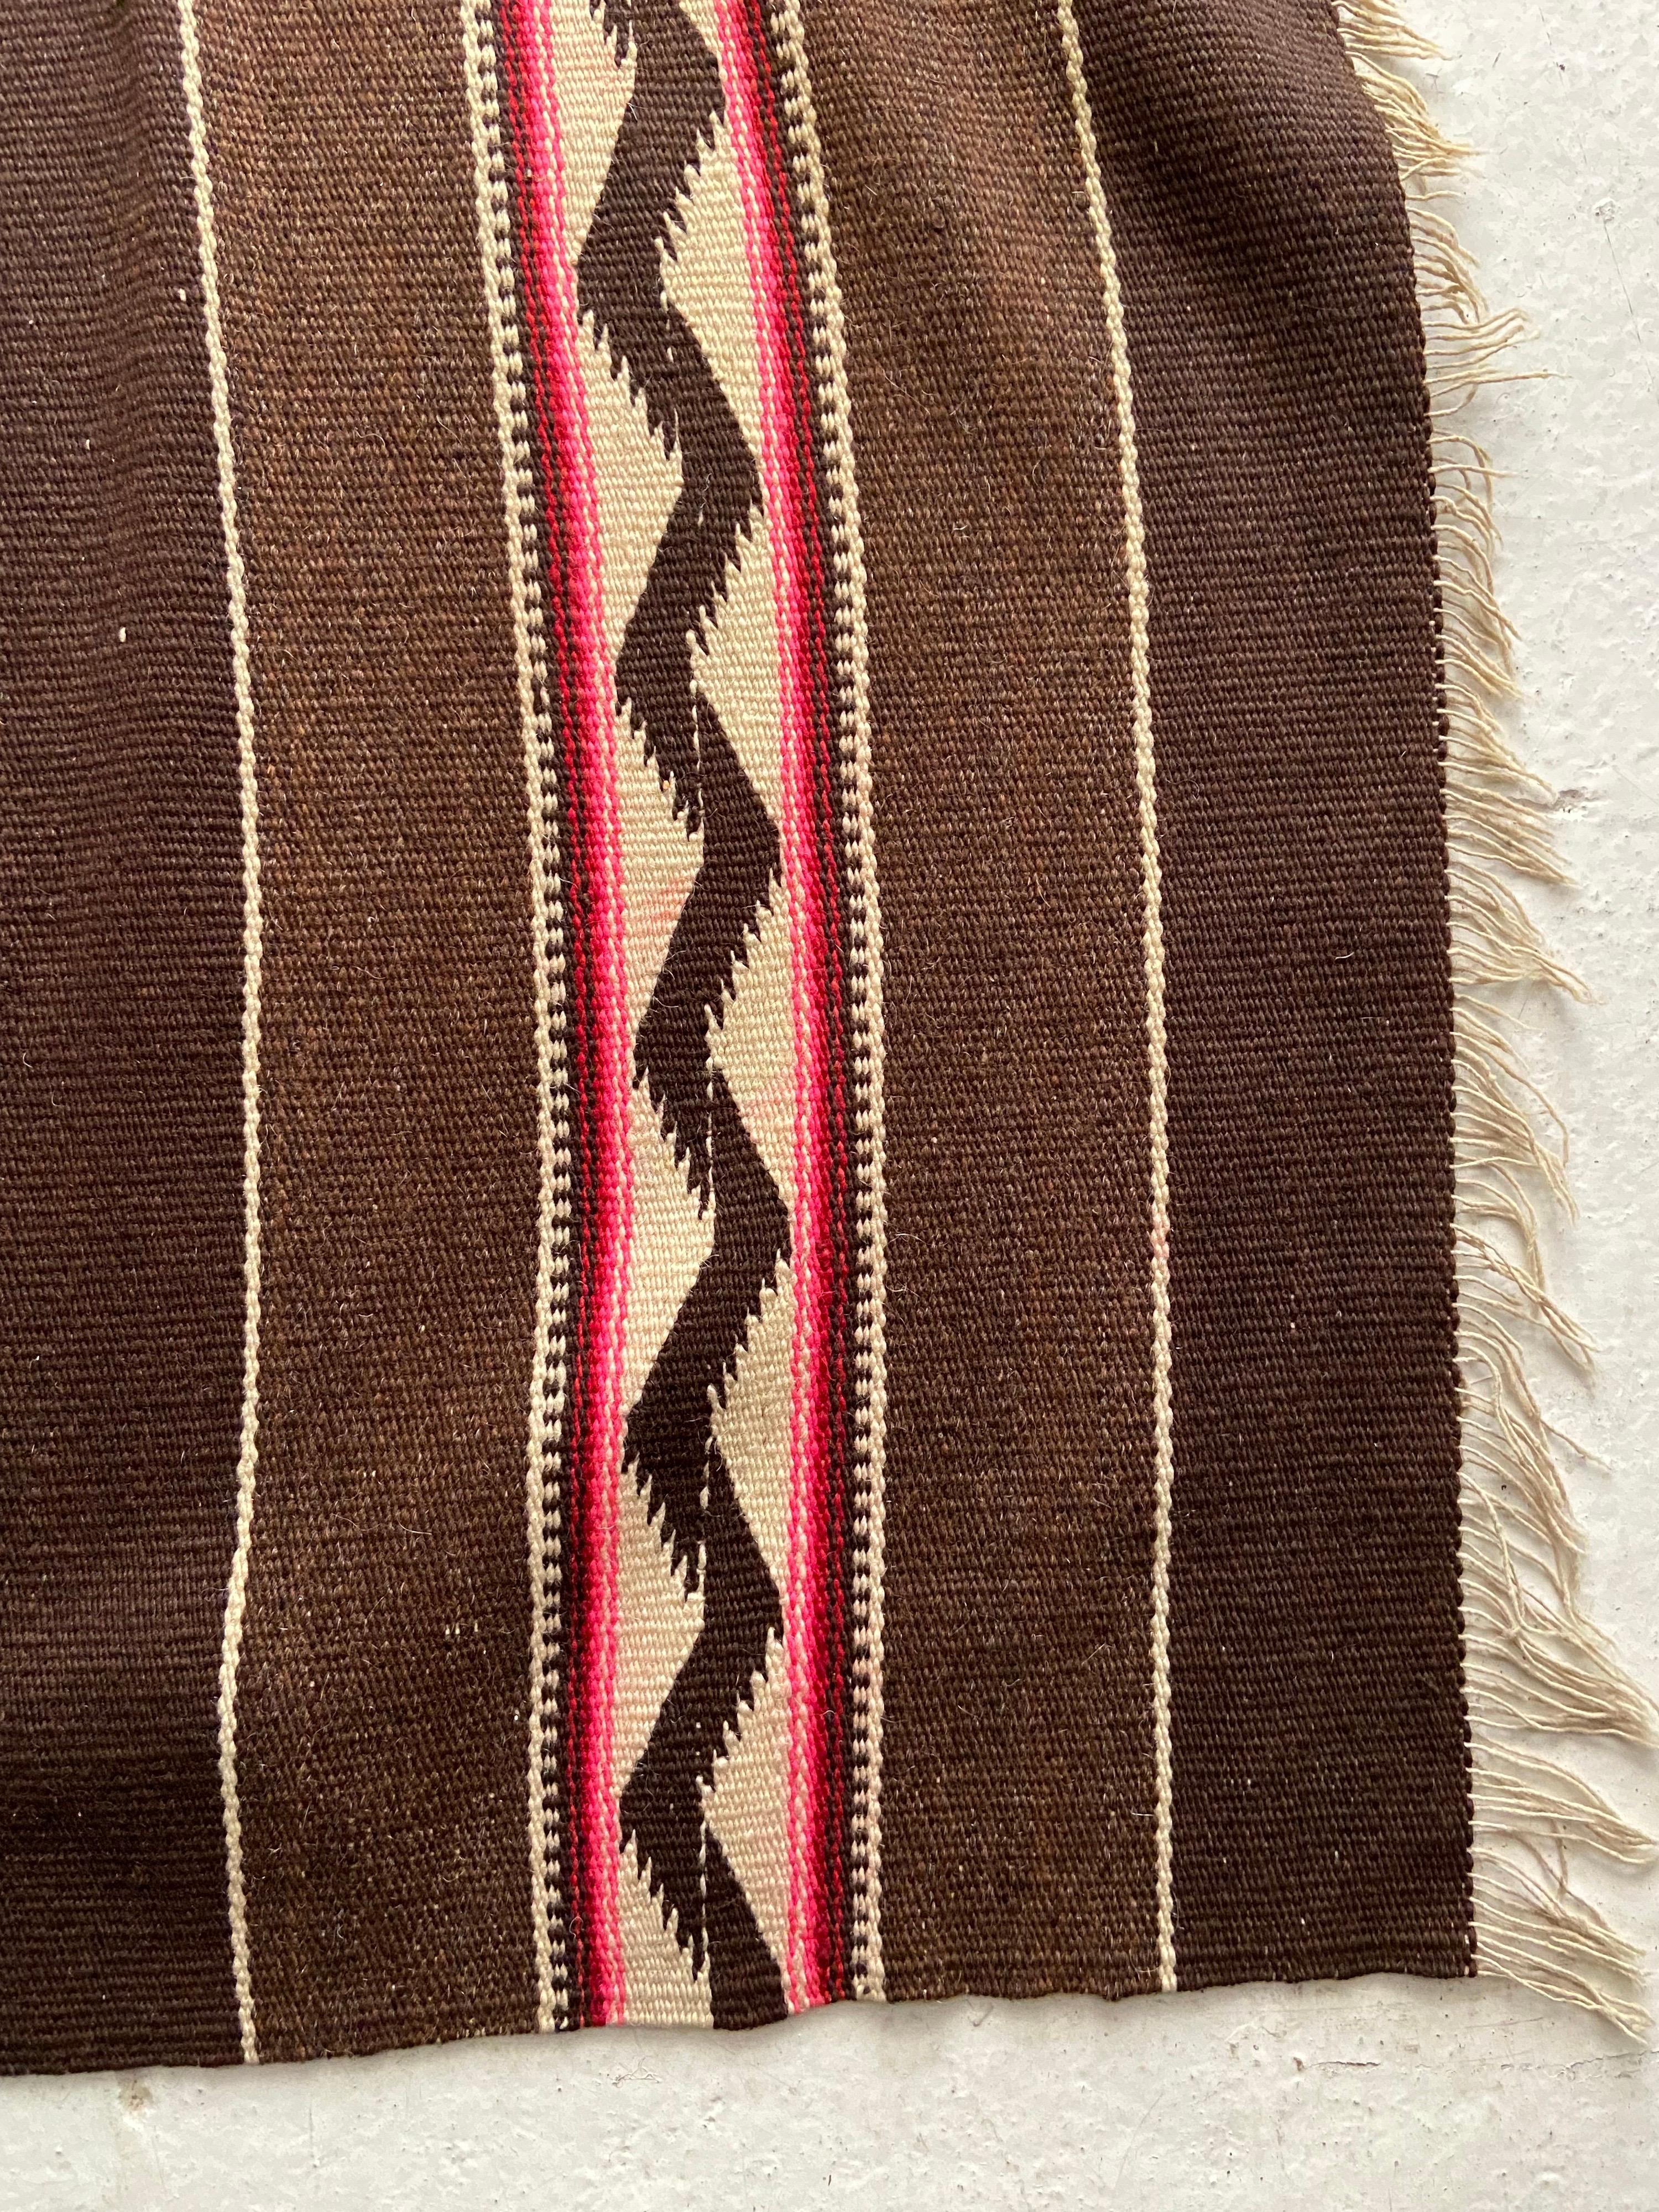 Folk Art Mid-20th Century Wool Blanket from Oaxaca, Mexico